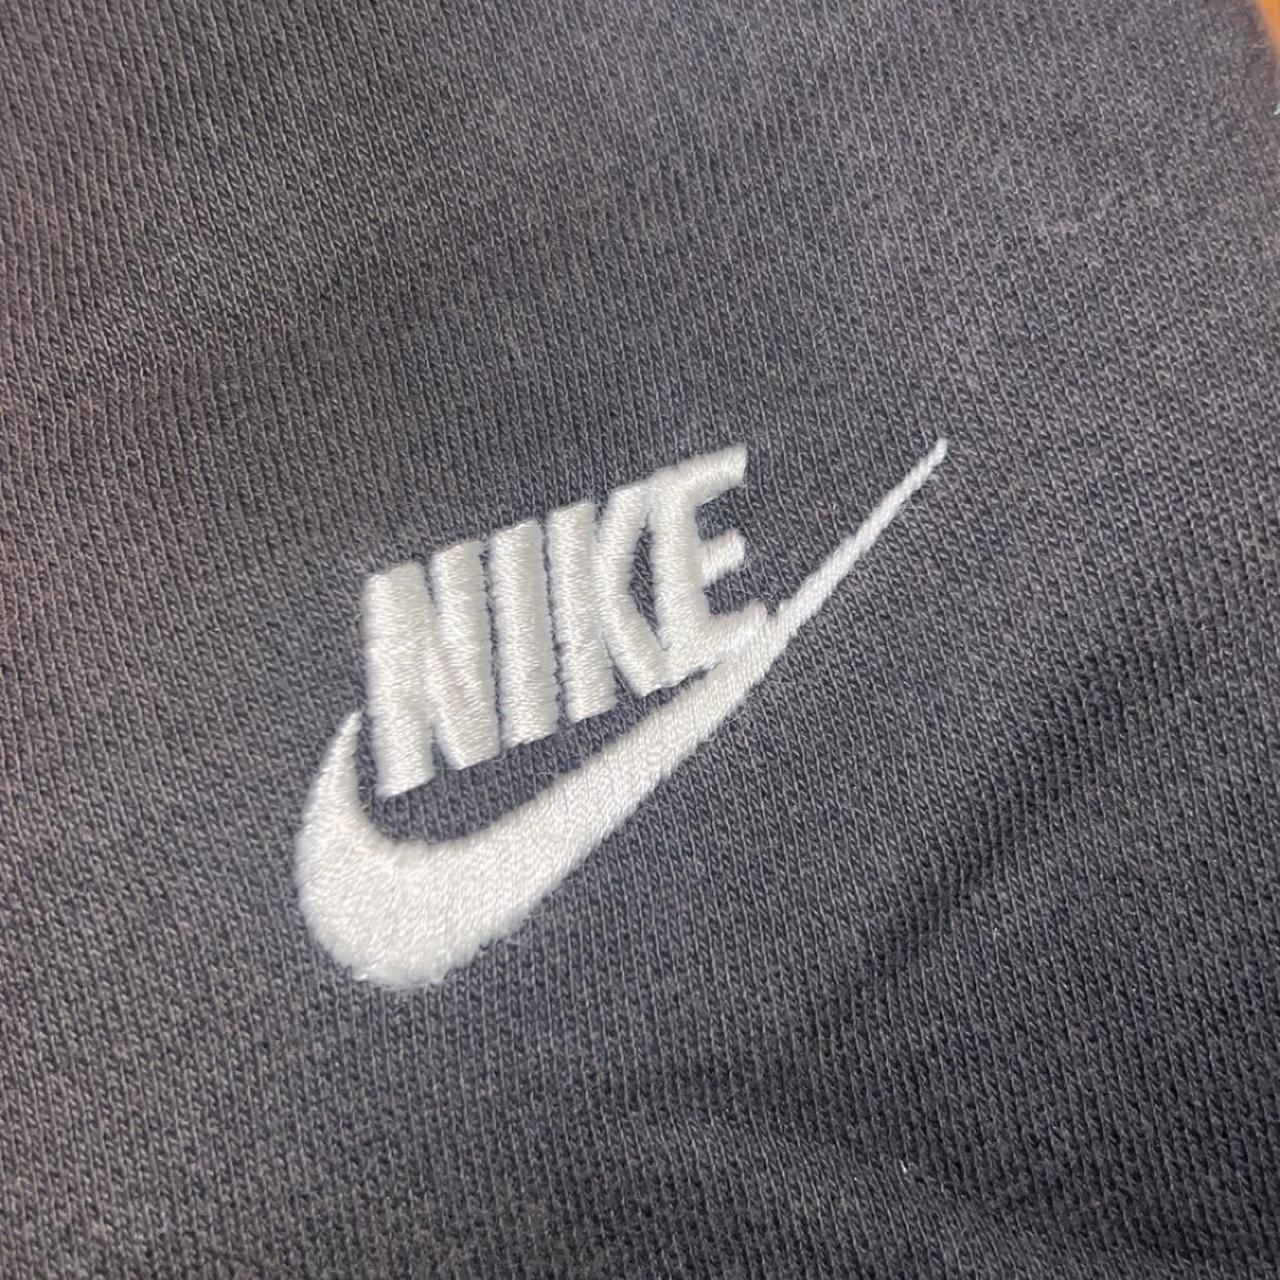 Black Nike Sweatpants. (Baggy) Size - L Nice Fade to - Depop